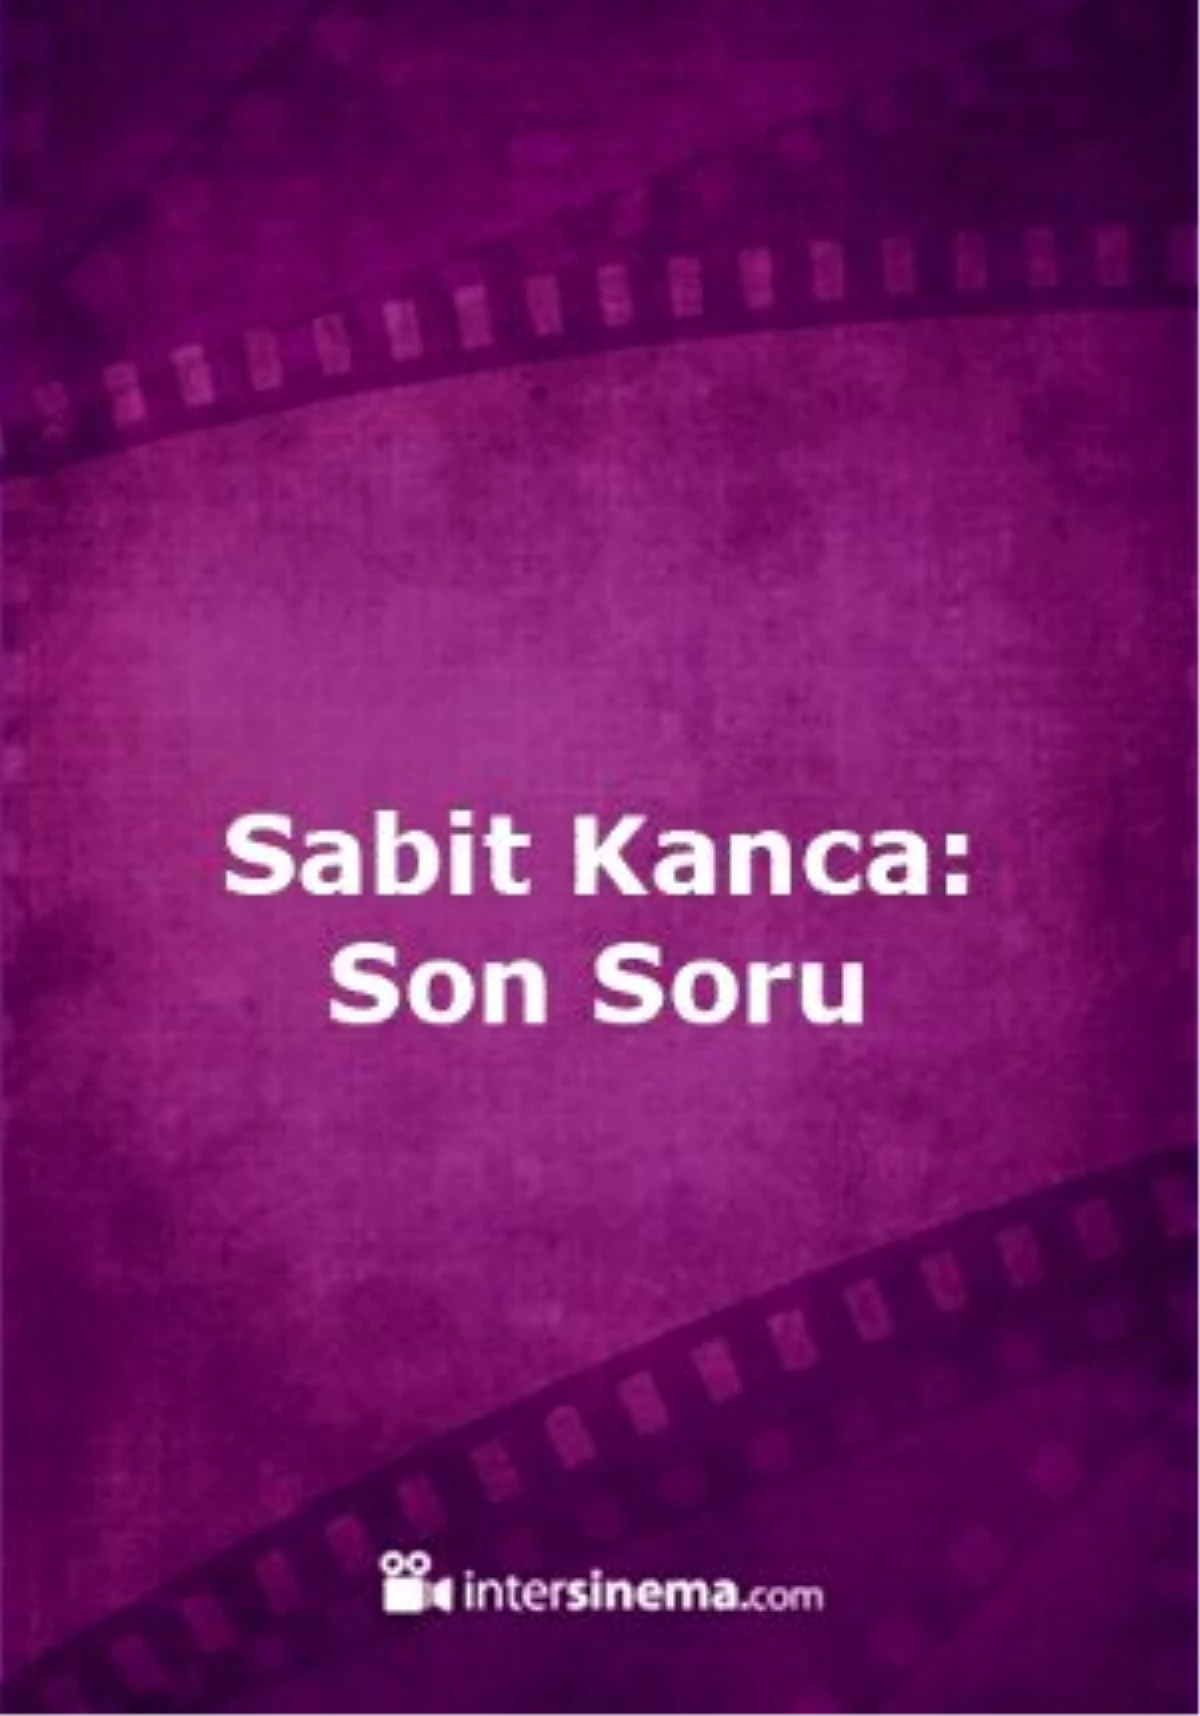 Sabit Kanca: Son Soru Filmi